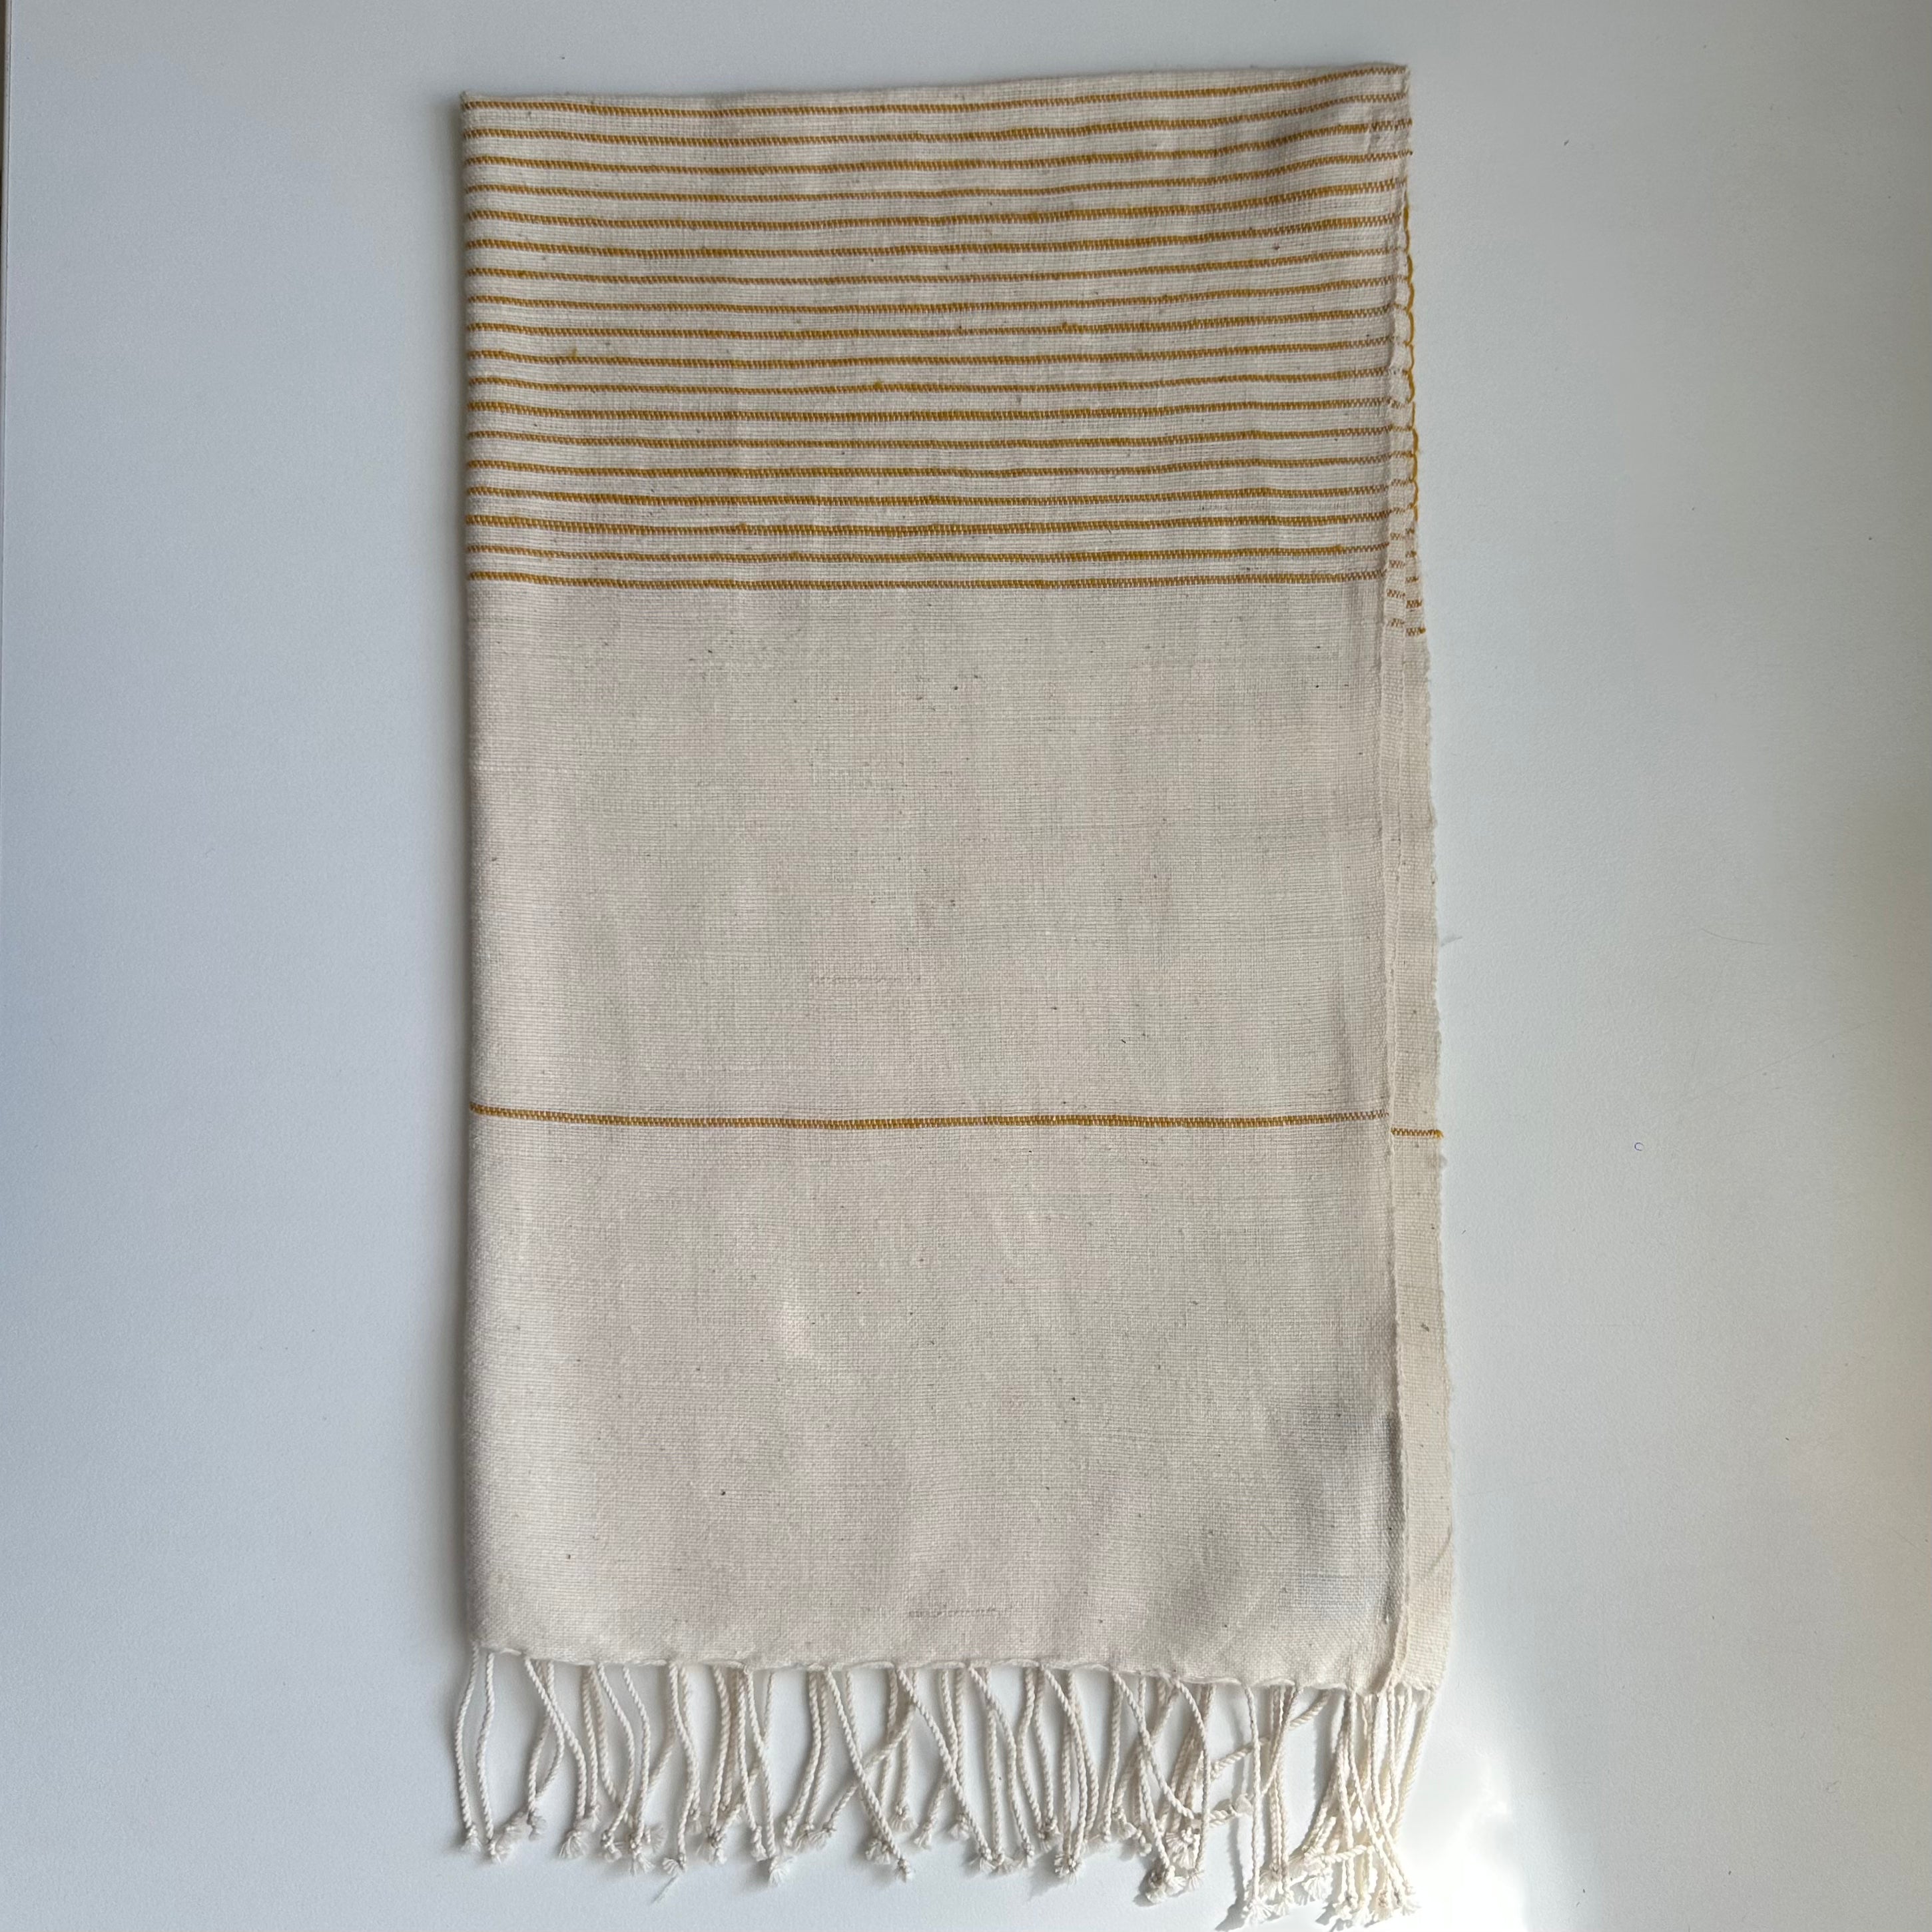  Gold hand spun Ethiopian cotton hand towel